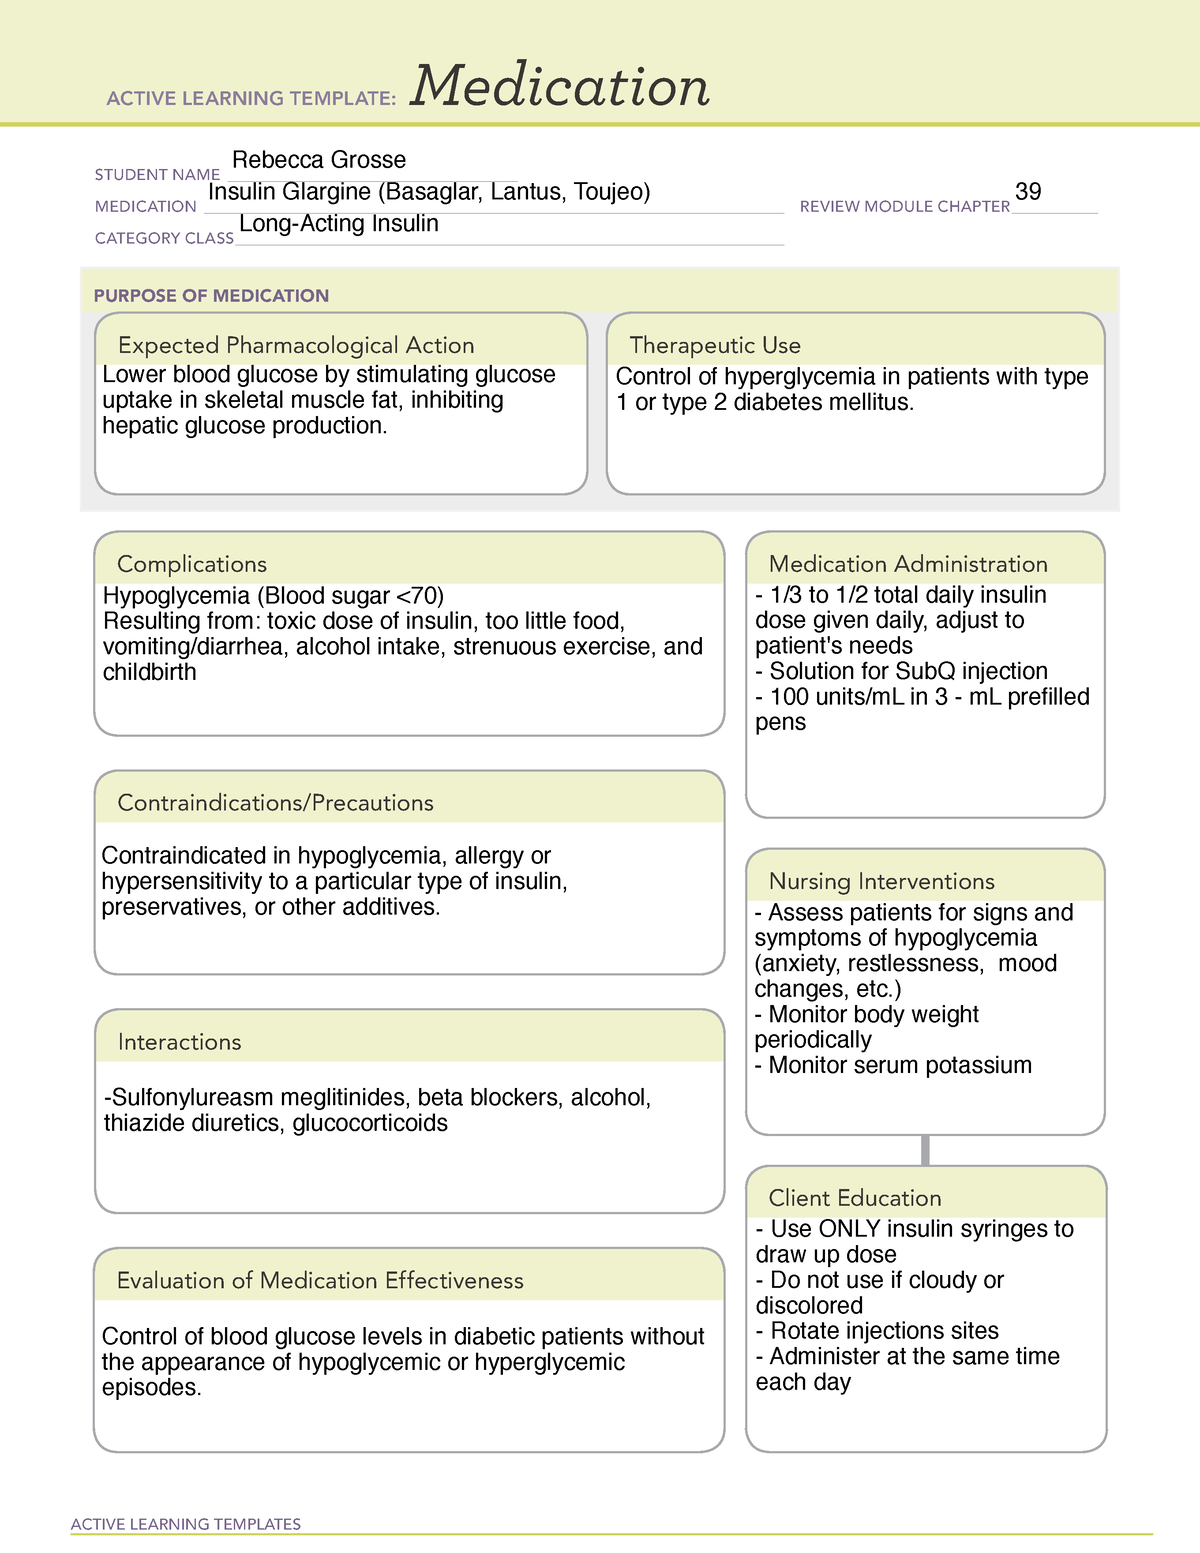 insulin-glargine-medication-template